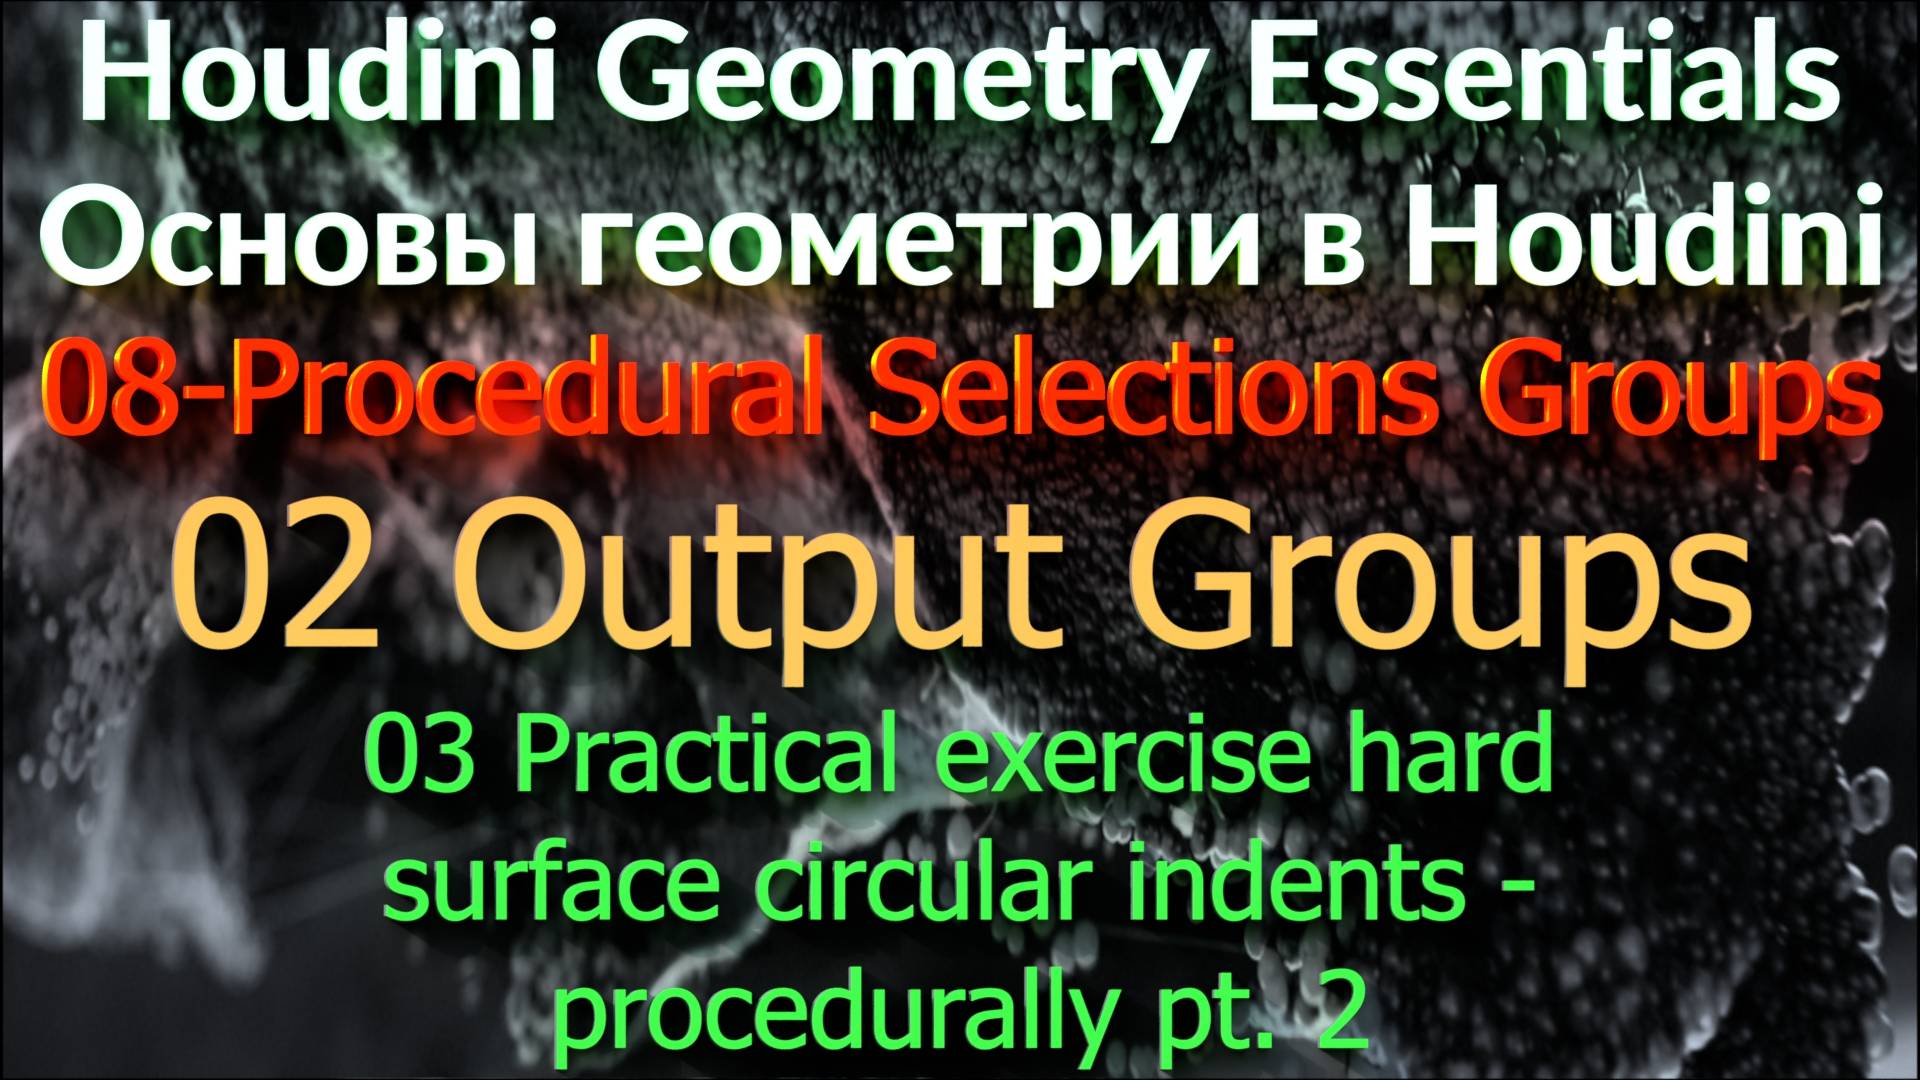 03 Practical exercise hard surface circular indents - procedurally pt. 2